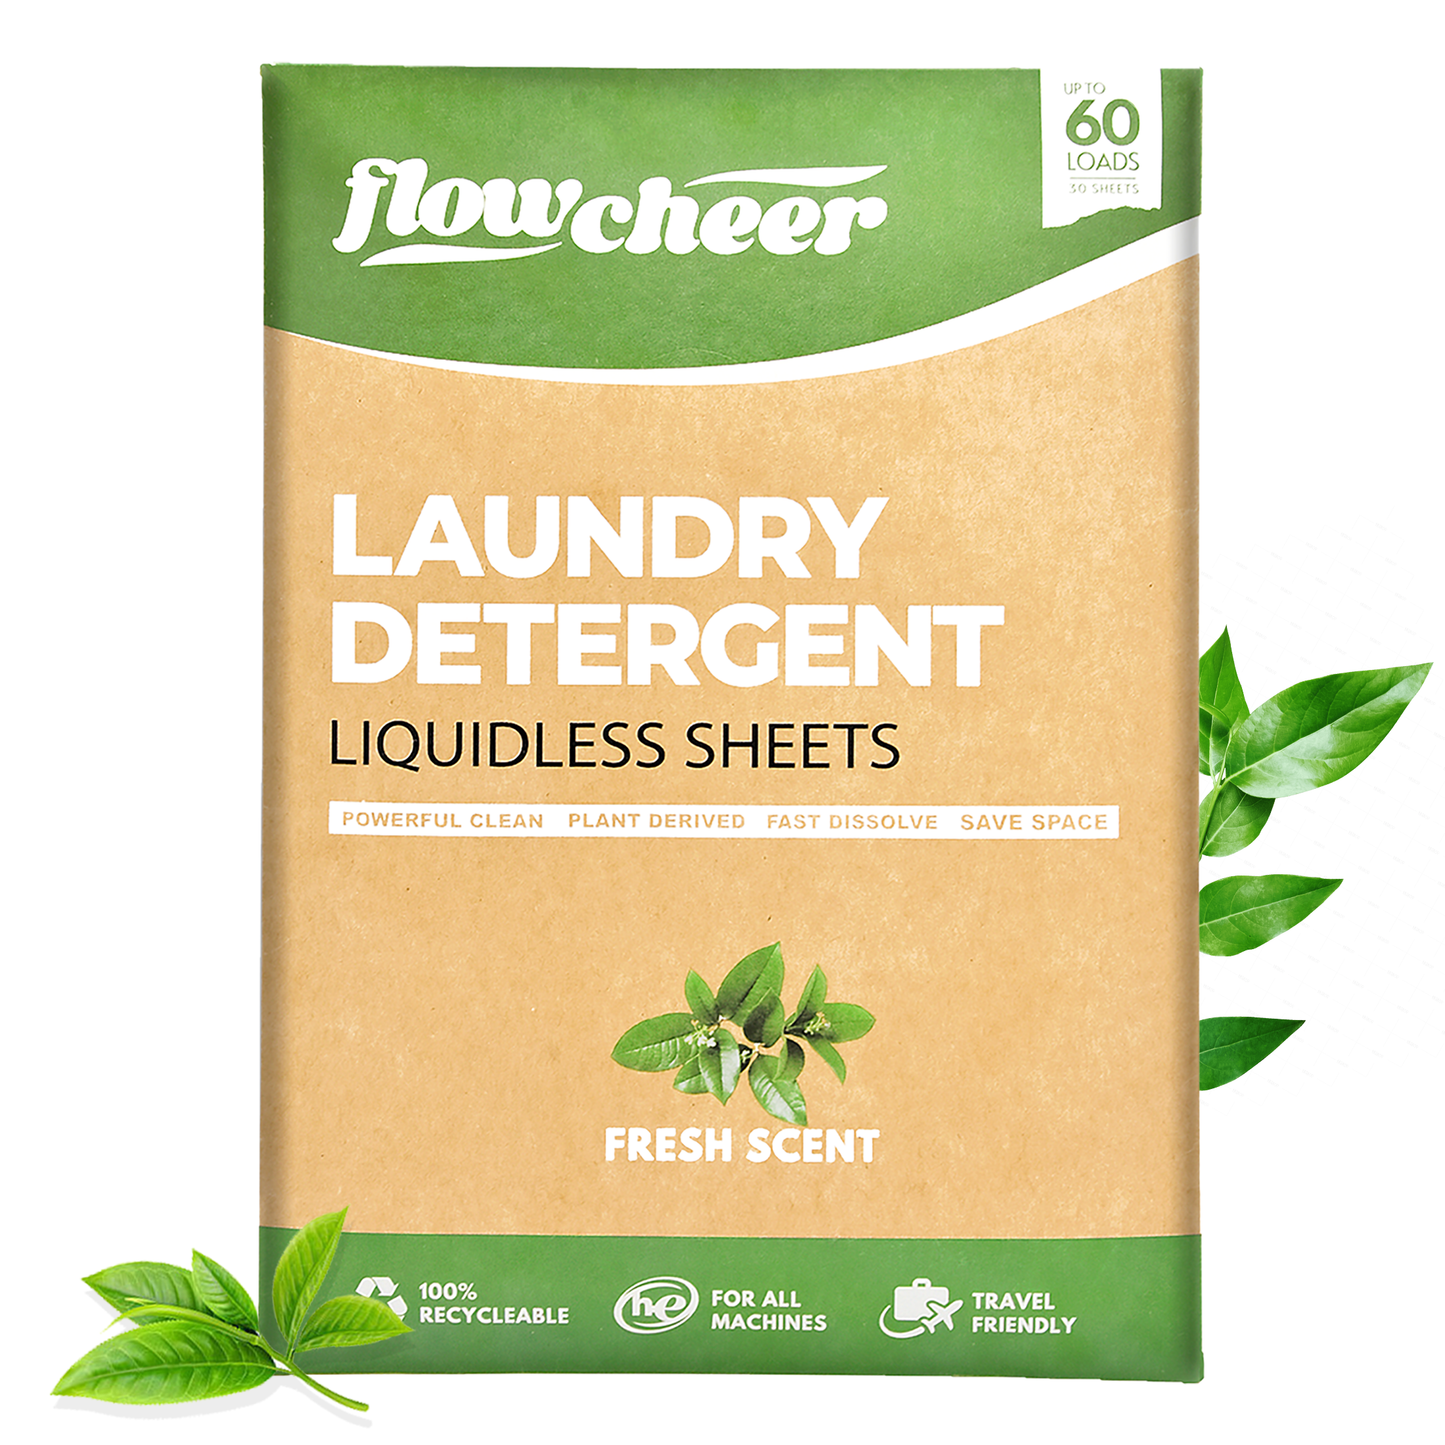 Flowcheer 洗衣片 30 张 - 低过敏性洗衣片 - 无浪费&amp;环保 - 植物香味